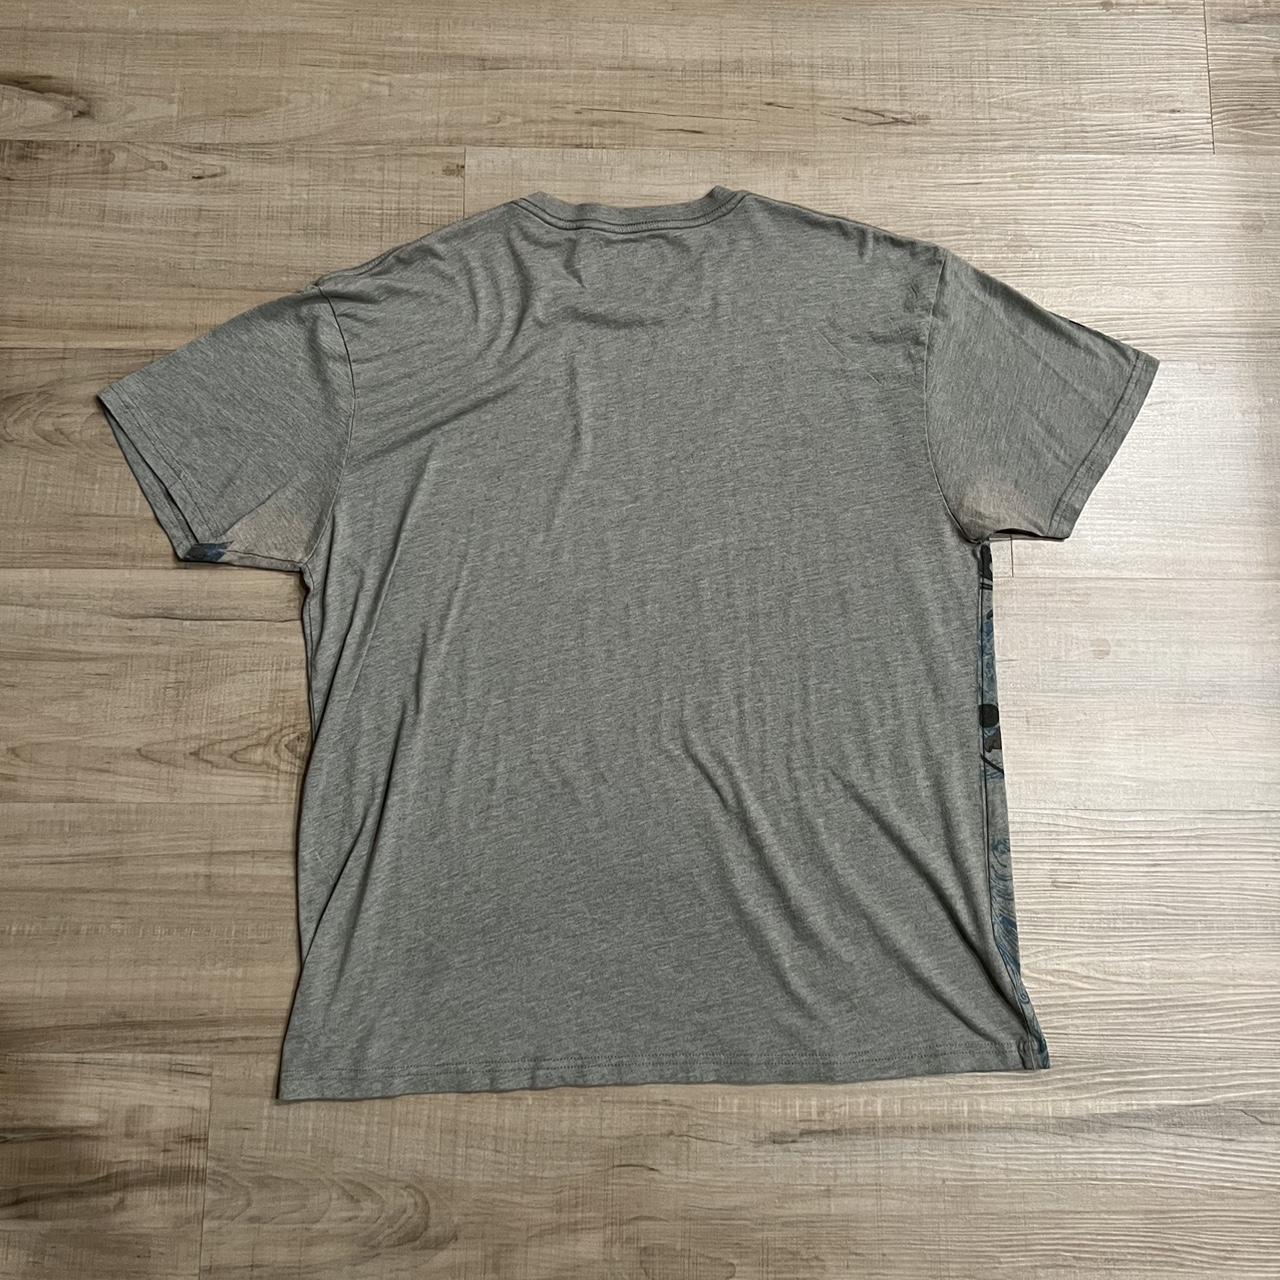 Carbon Men's Blue and Grey T-shirt (4)